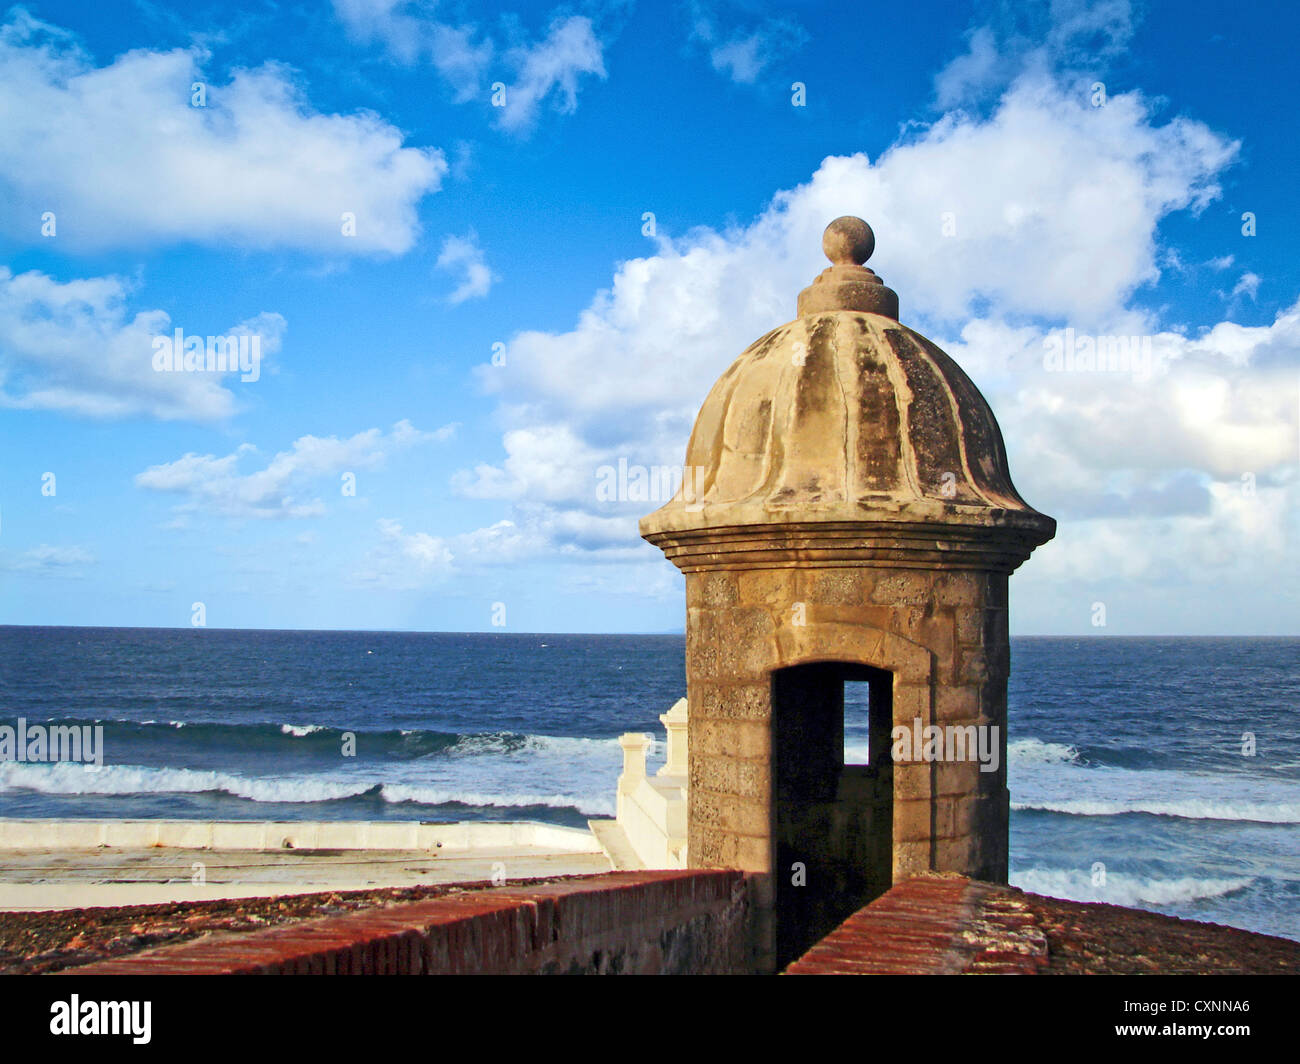 Puerto Rico, San Juan, Fort San Felipe del Morro, Watch tower and ocean. Stock Photo